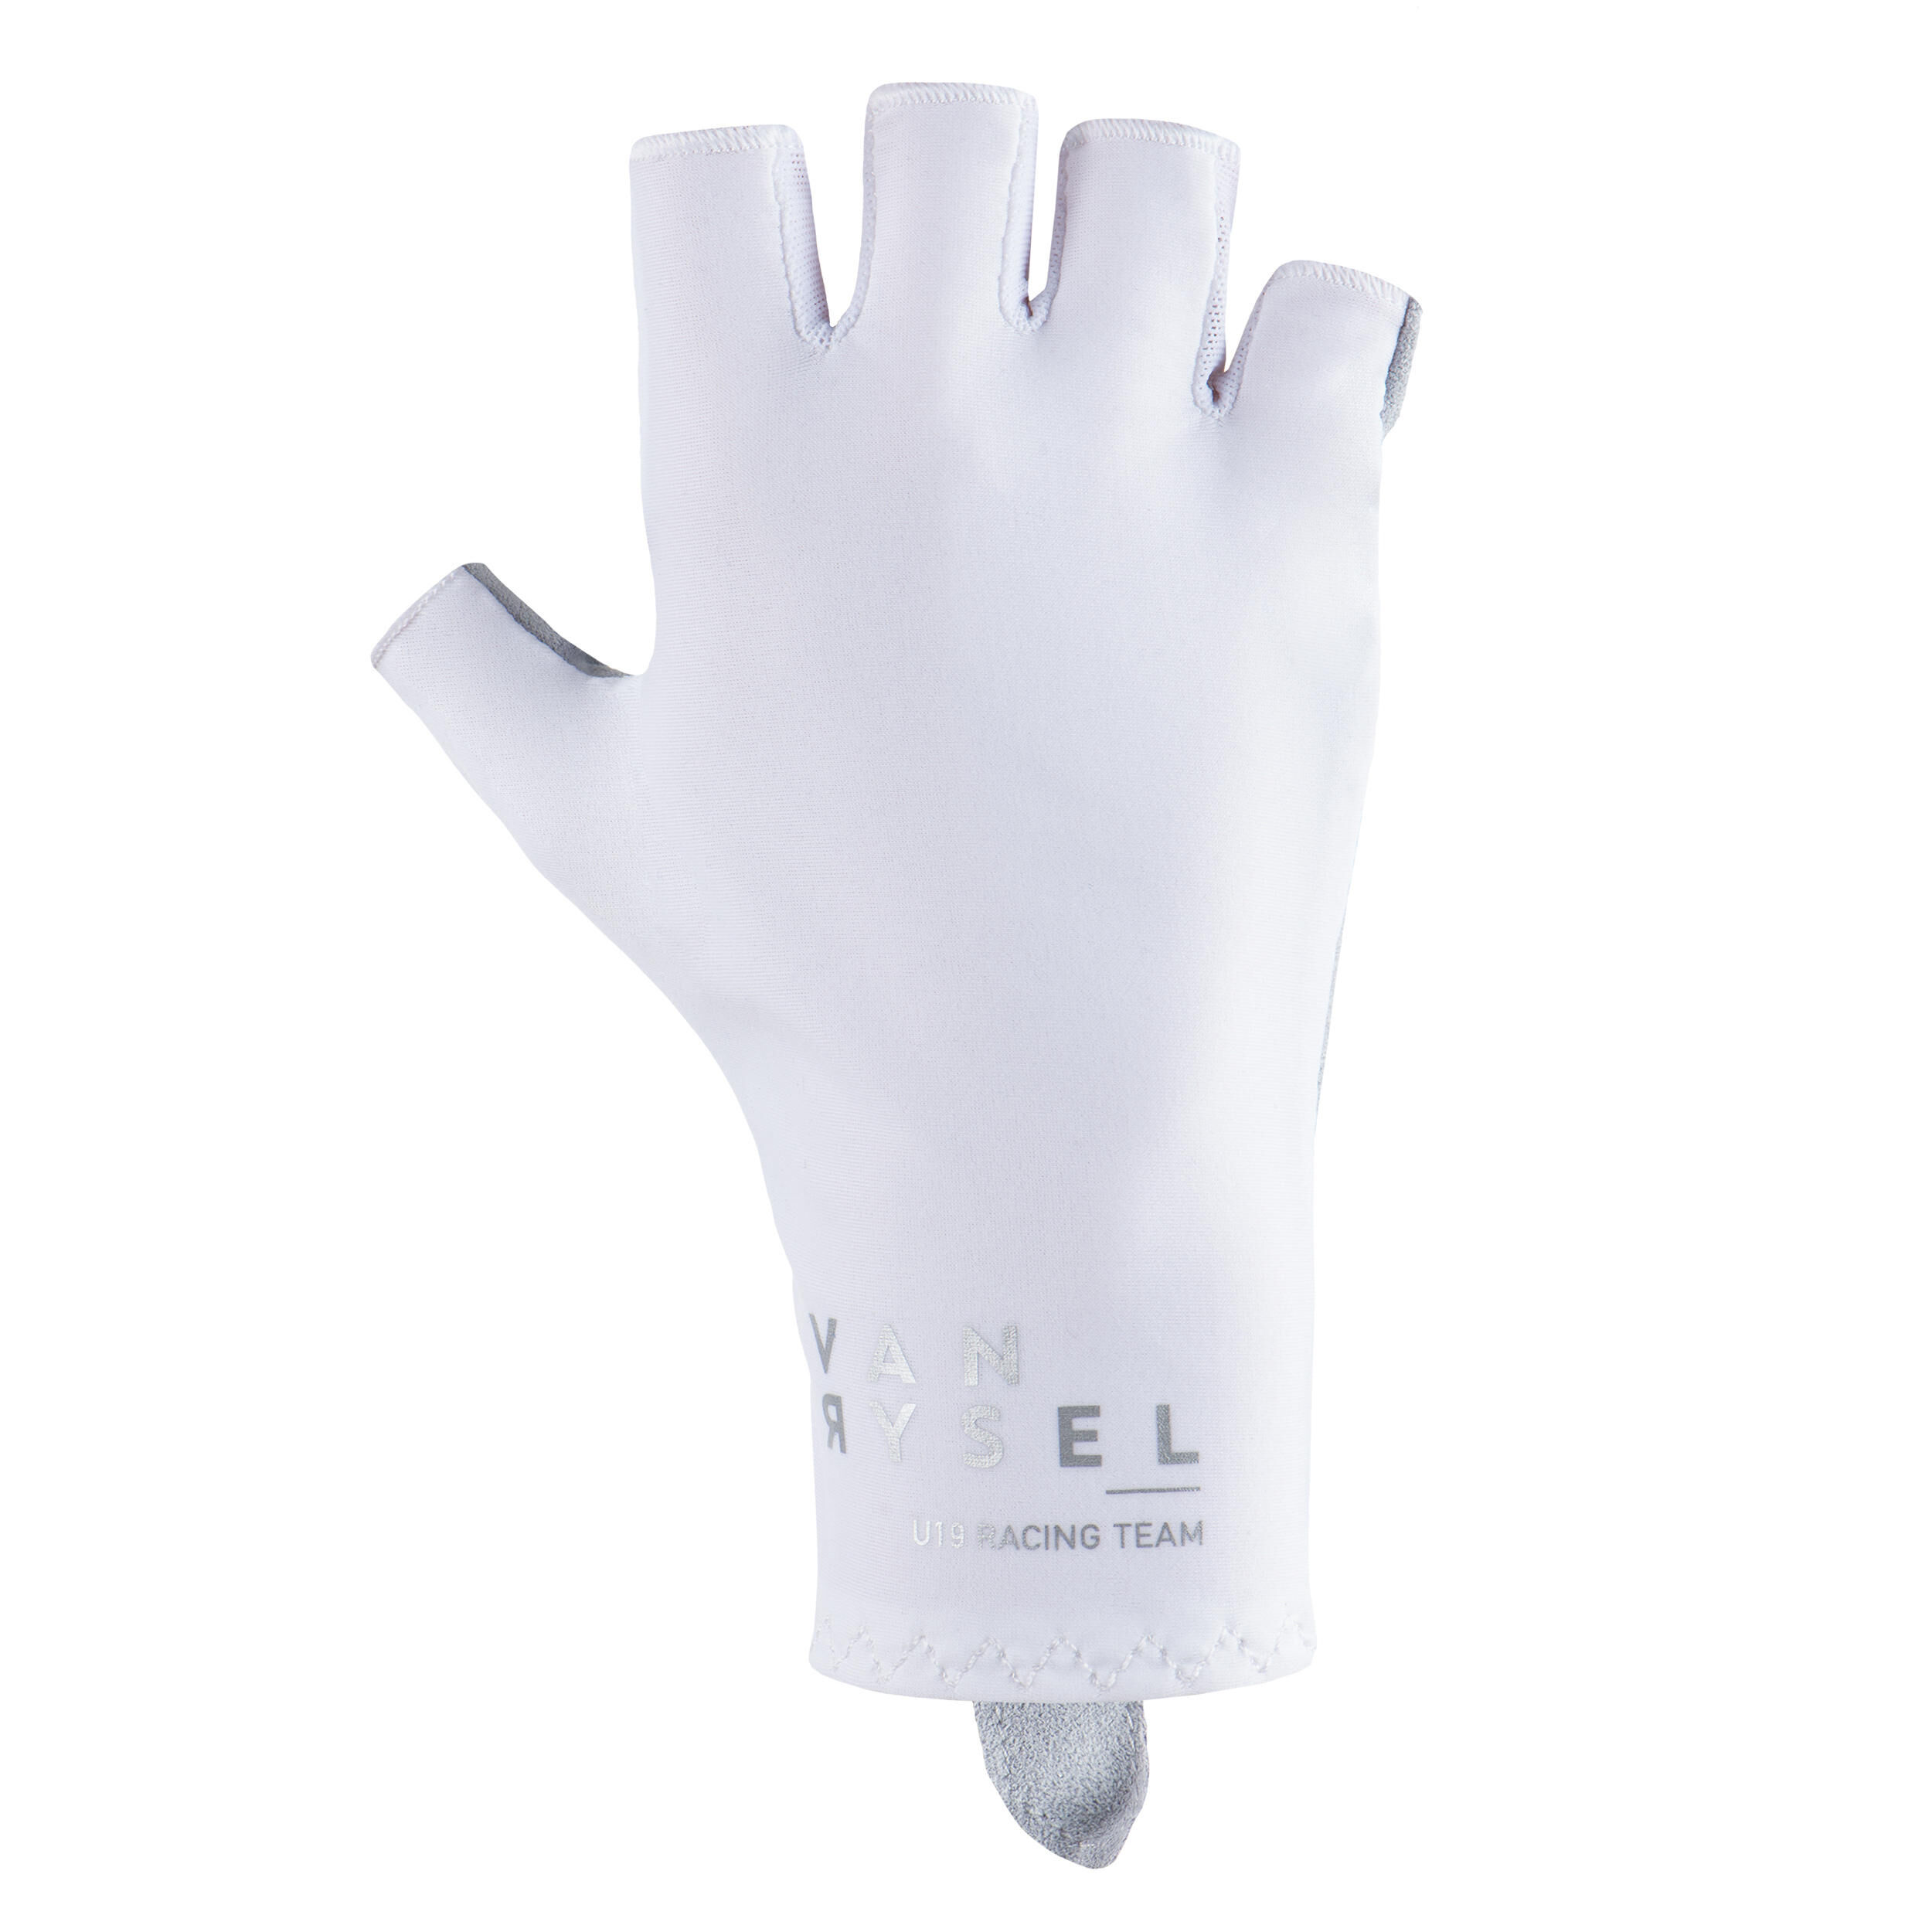 VAN RYSEL Cycling Gloves Roadr 900 - White